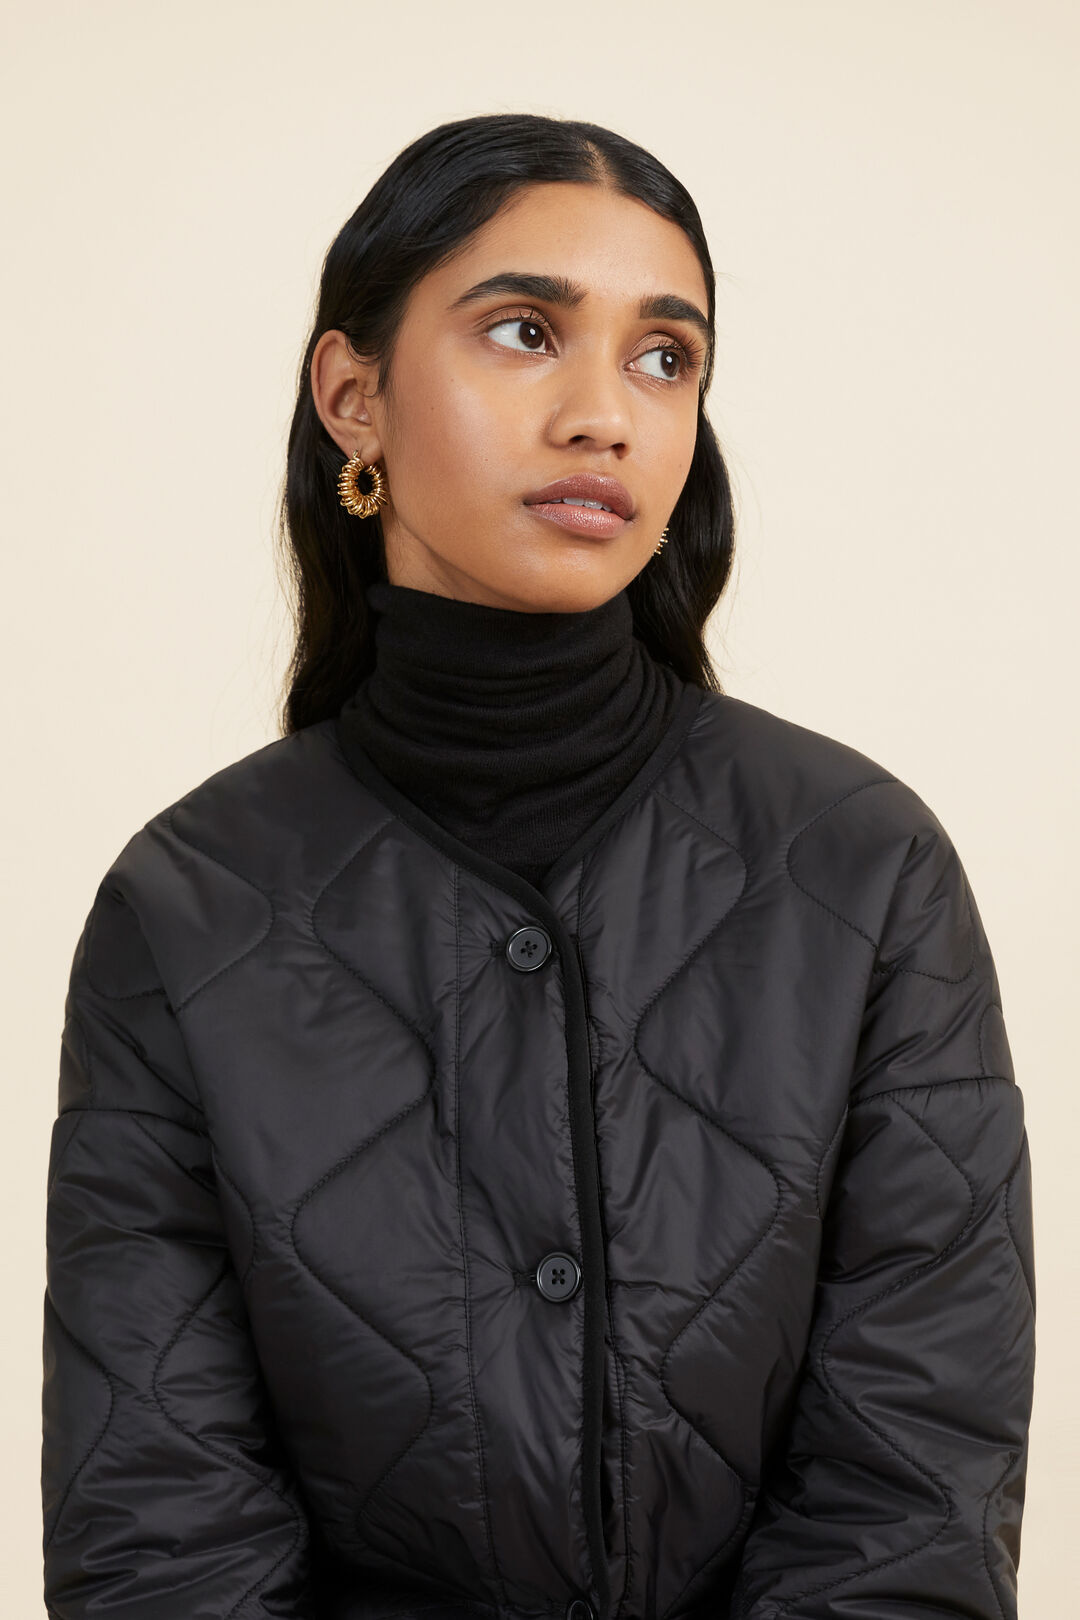 Oversized Quilted Jacket  Black  hi-res